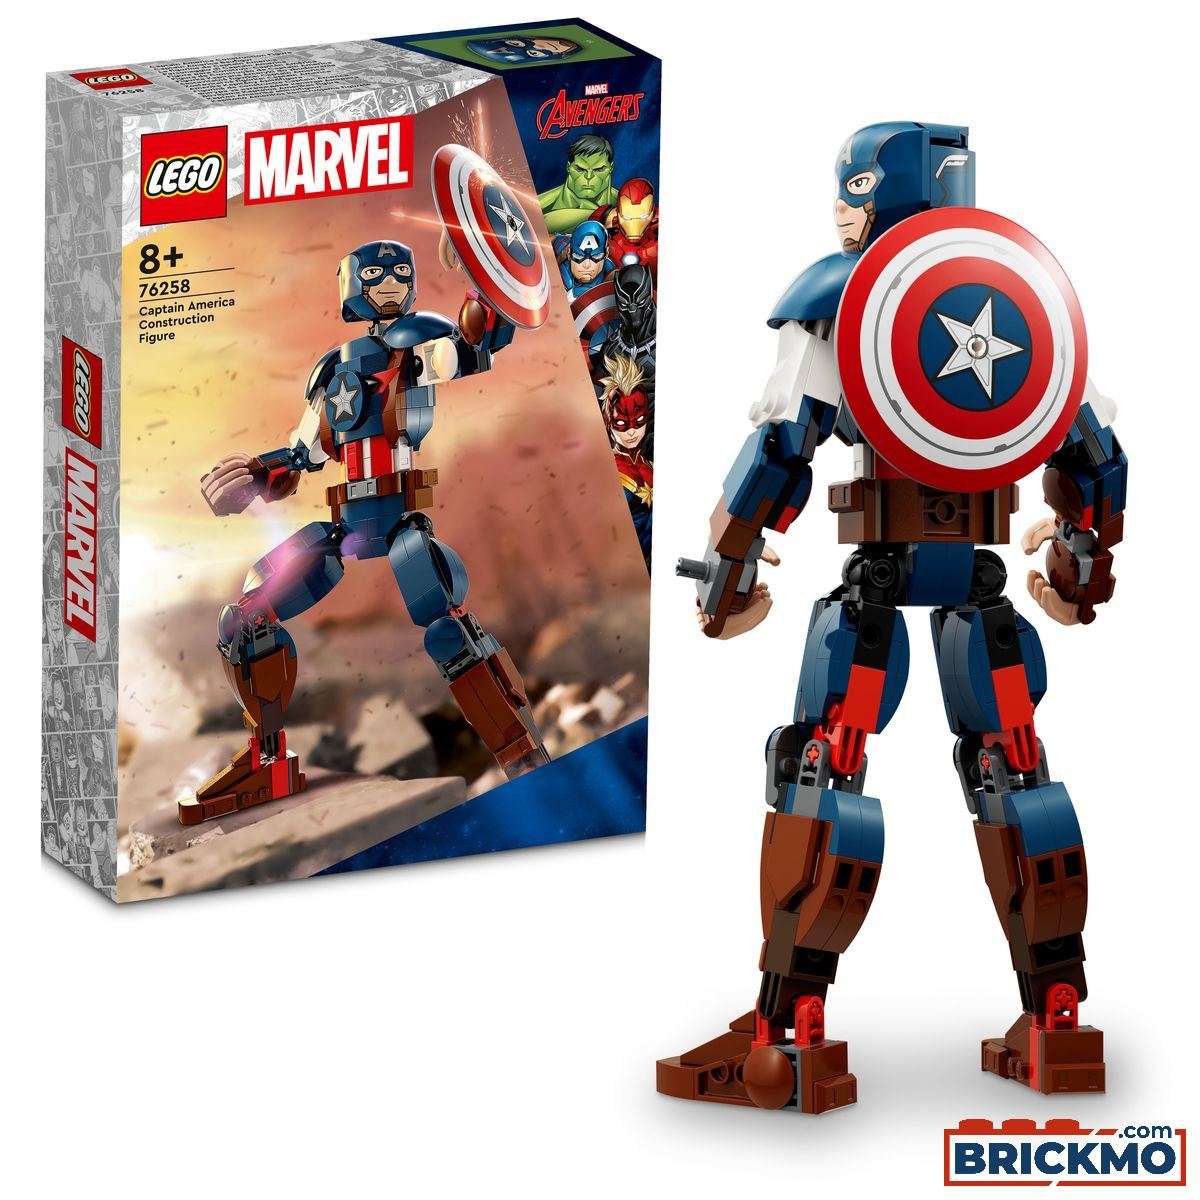 LEGO Marvel 76258 Captain America Construction Figure 76258